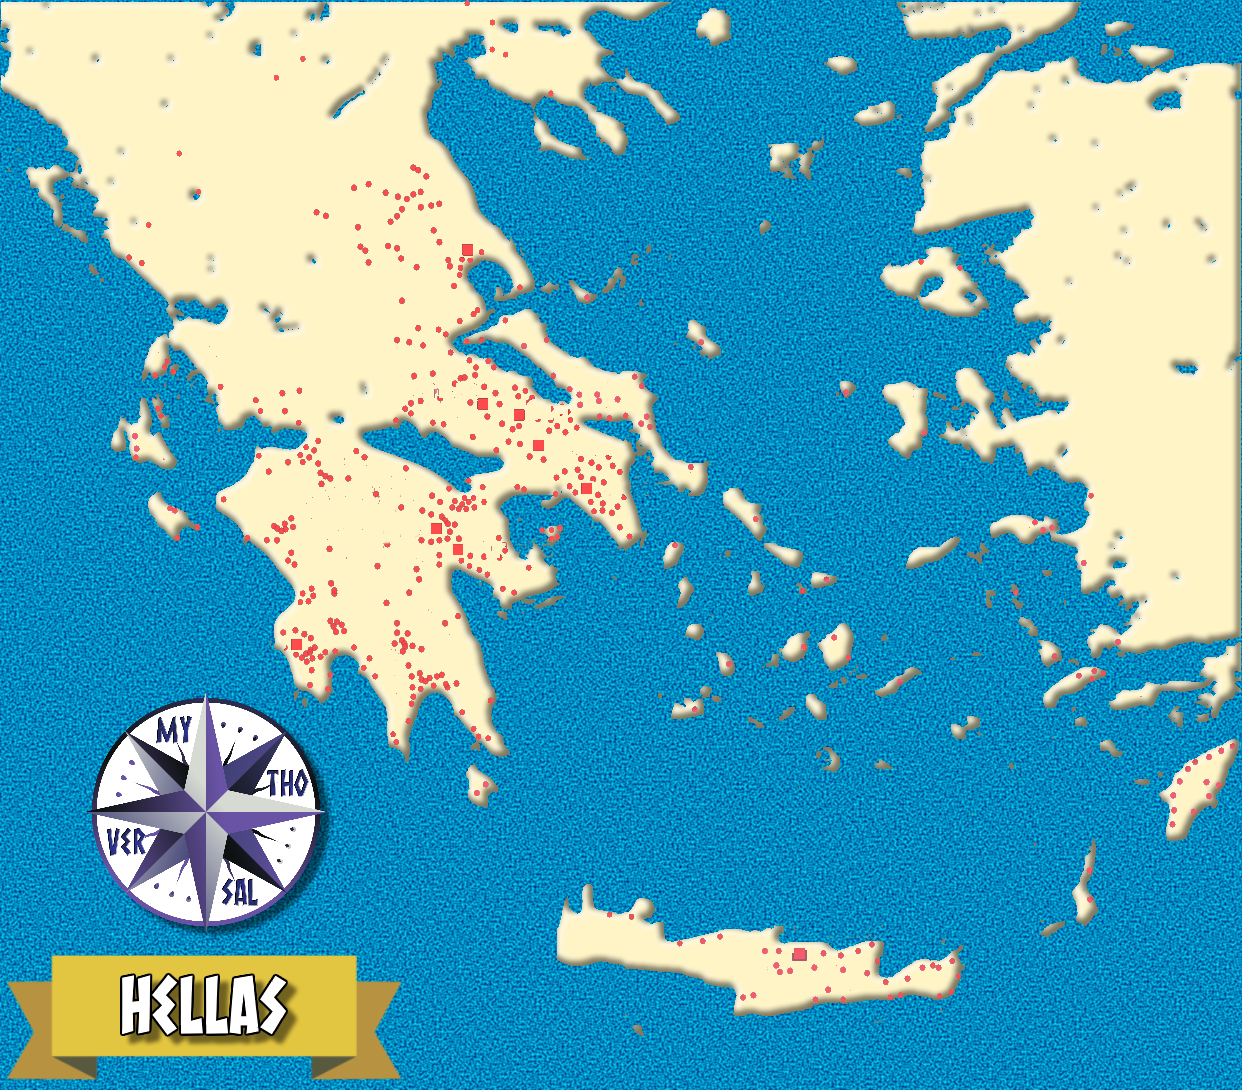 Mythoversal Hellas cover